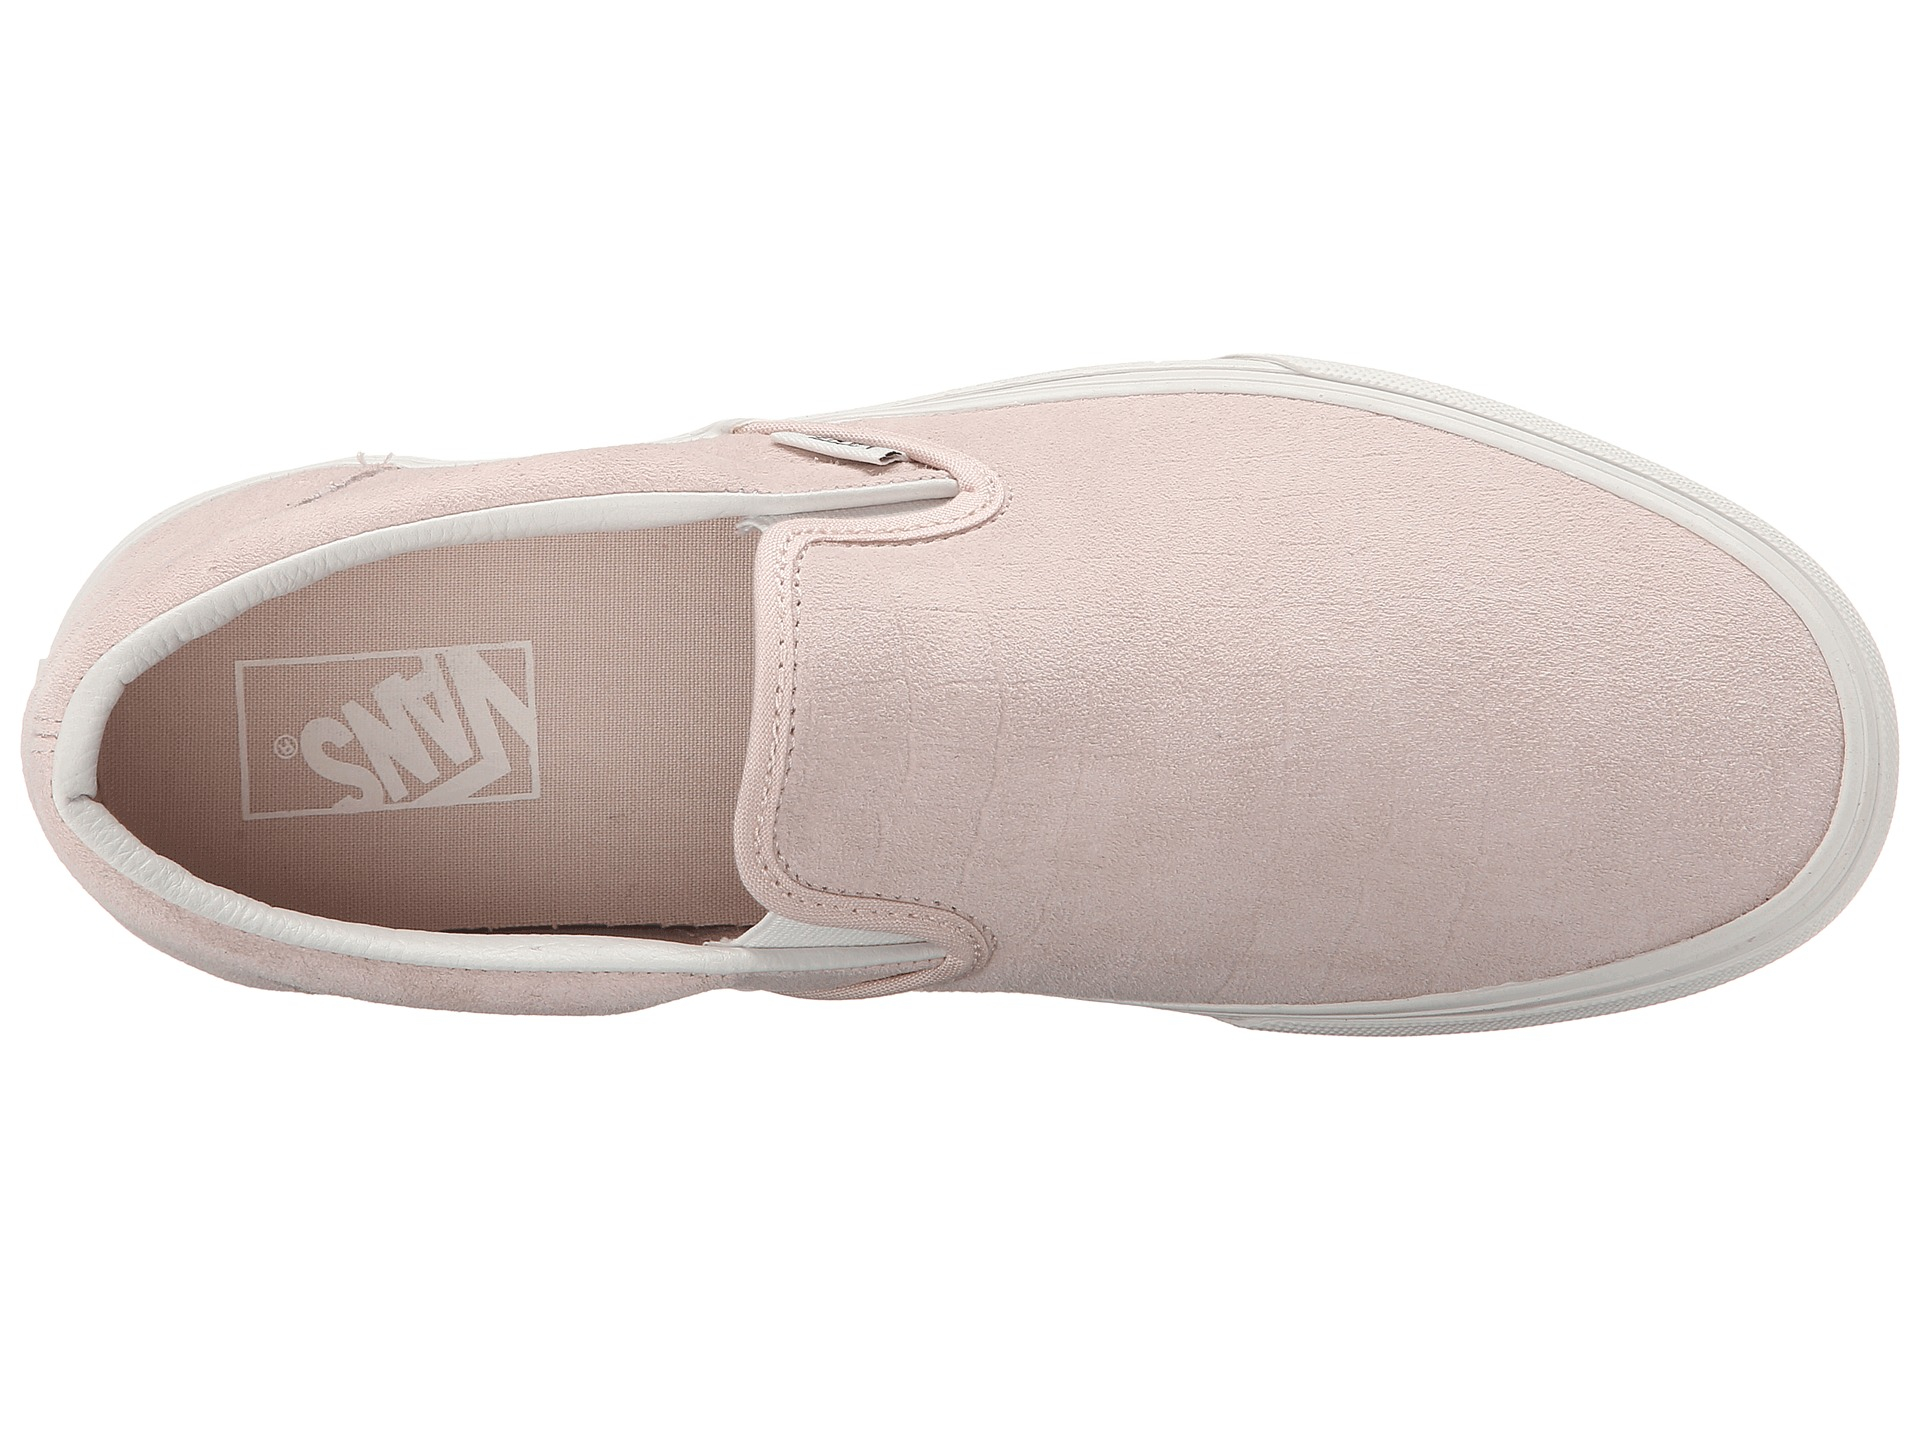 Vans Classic Slip-on™ in Pink | Lyst